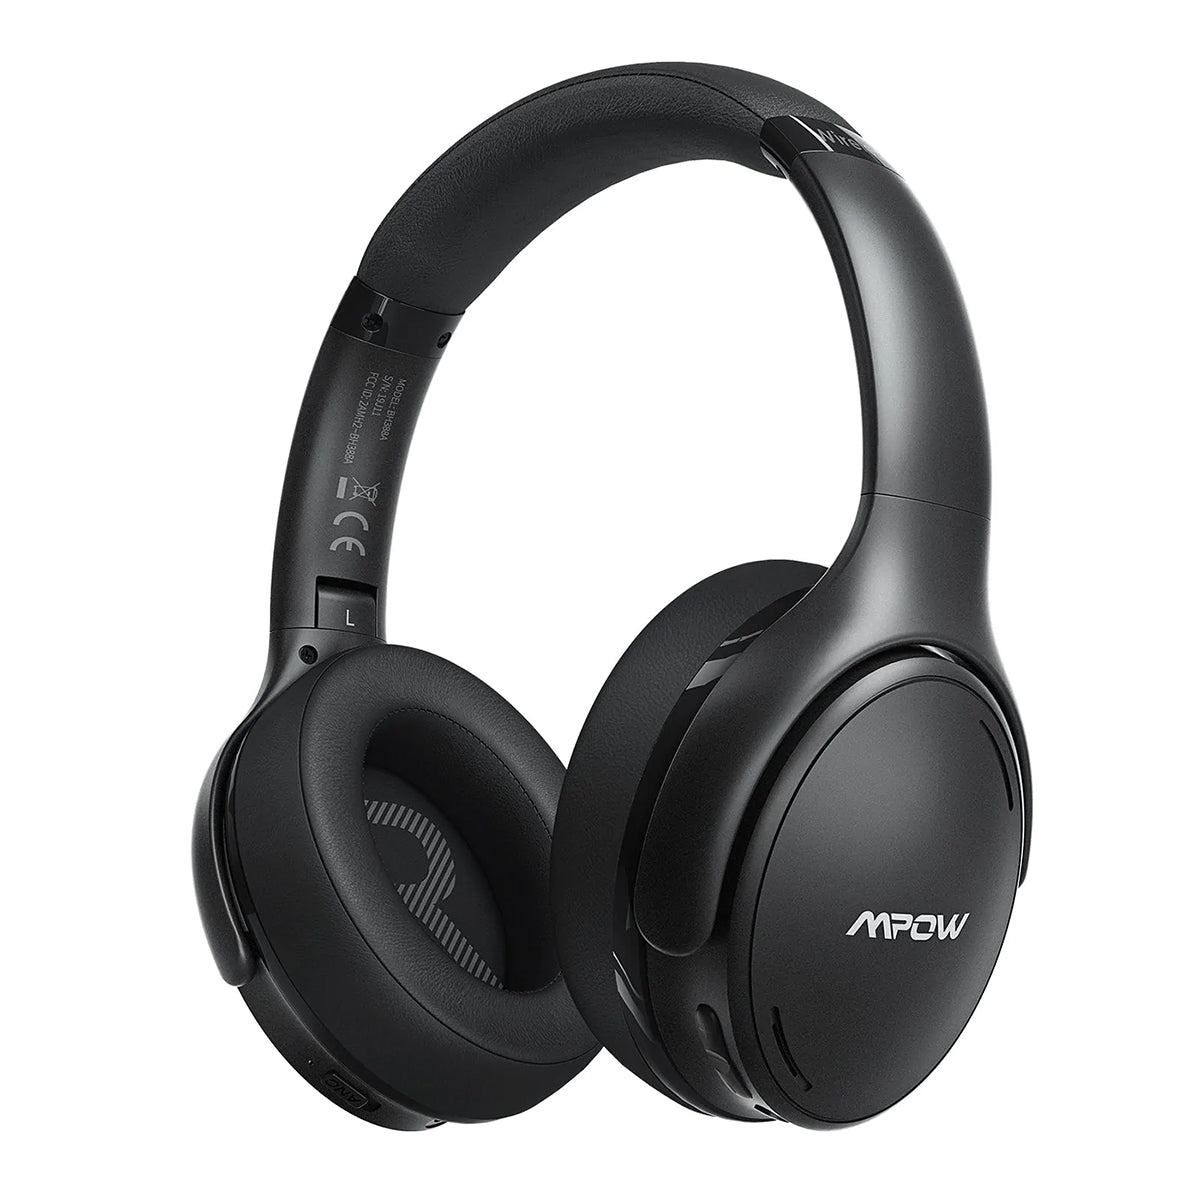 knijpen Opsommen Evaluatie Mpow H19 IPO Bluetooth Active Noise Cancelling Headphones